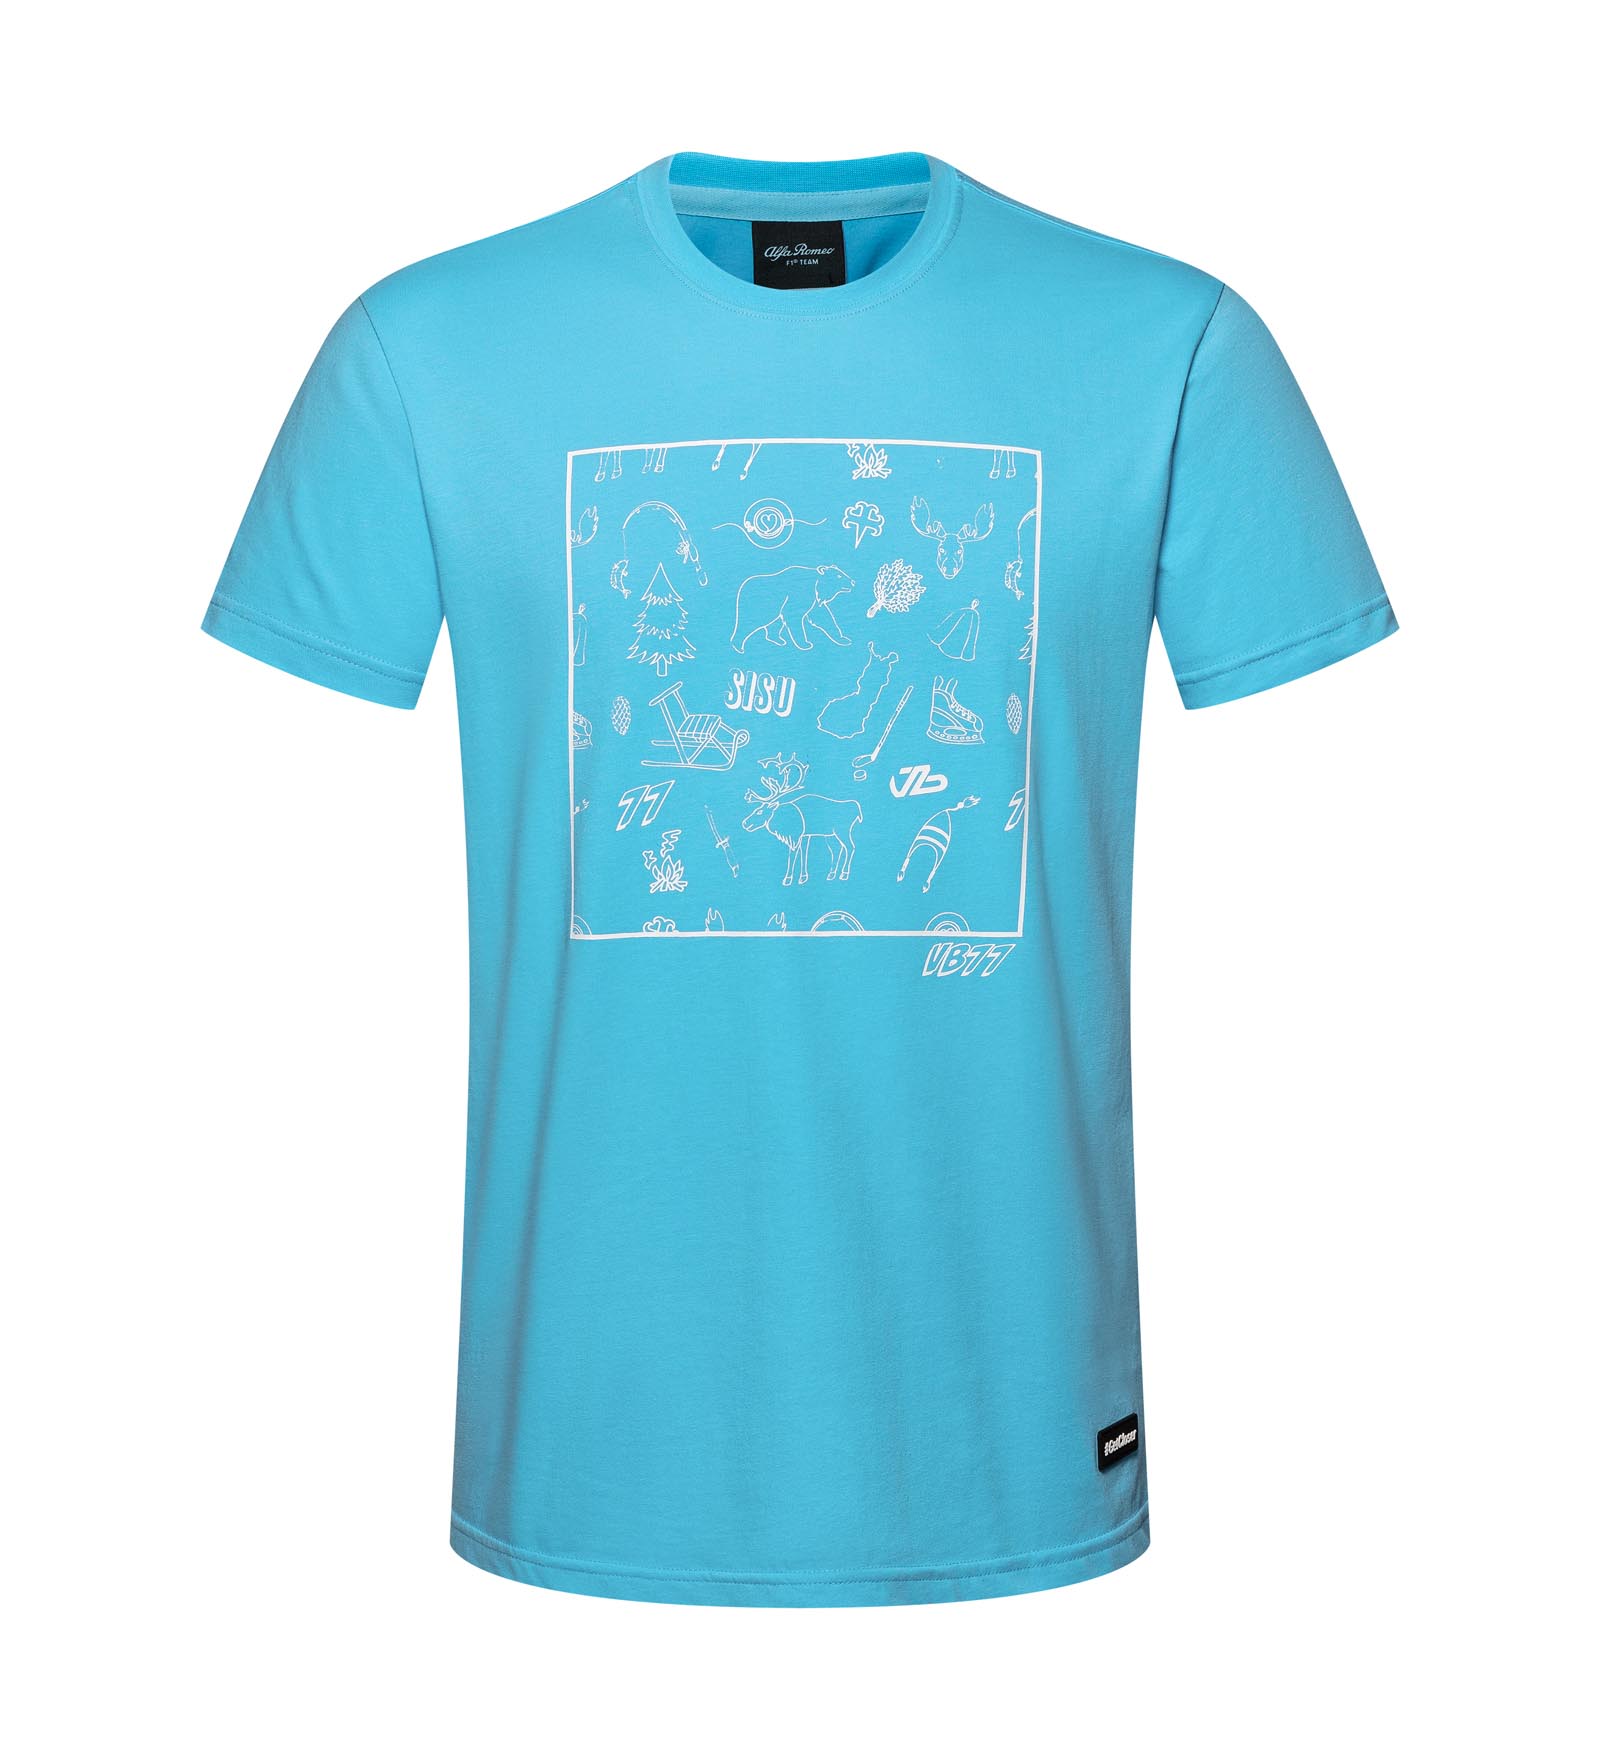 T-Shirt #TeamBottas BlueXL Valtteri Bottas